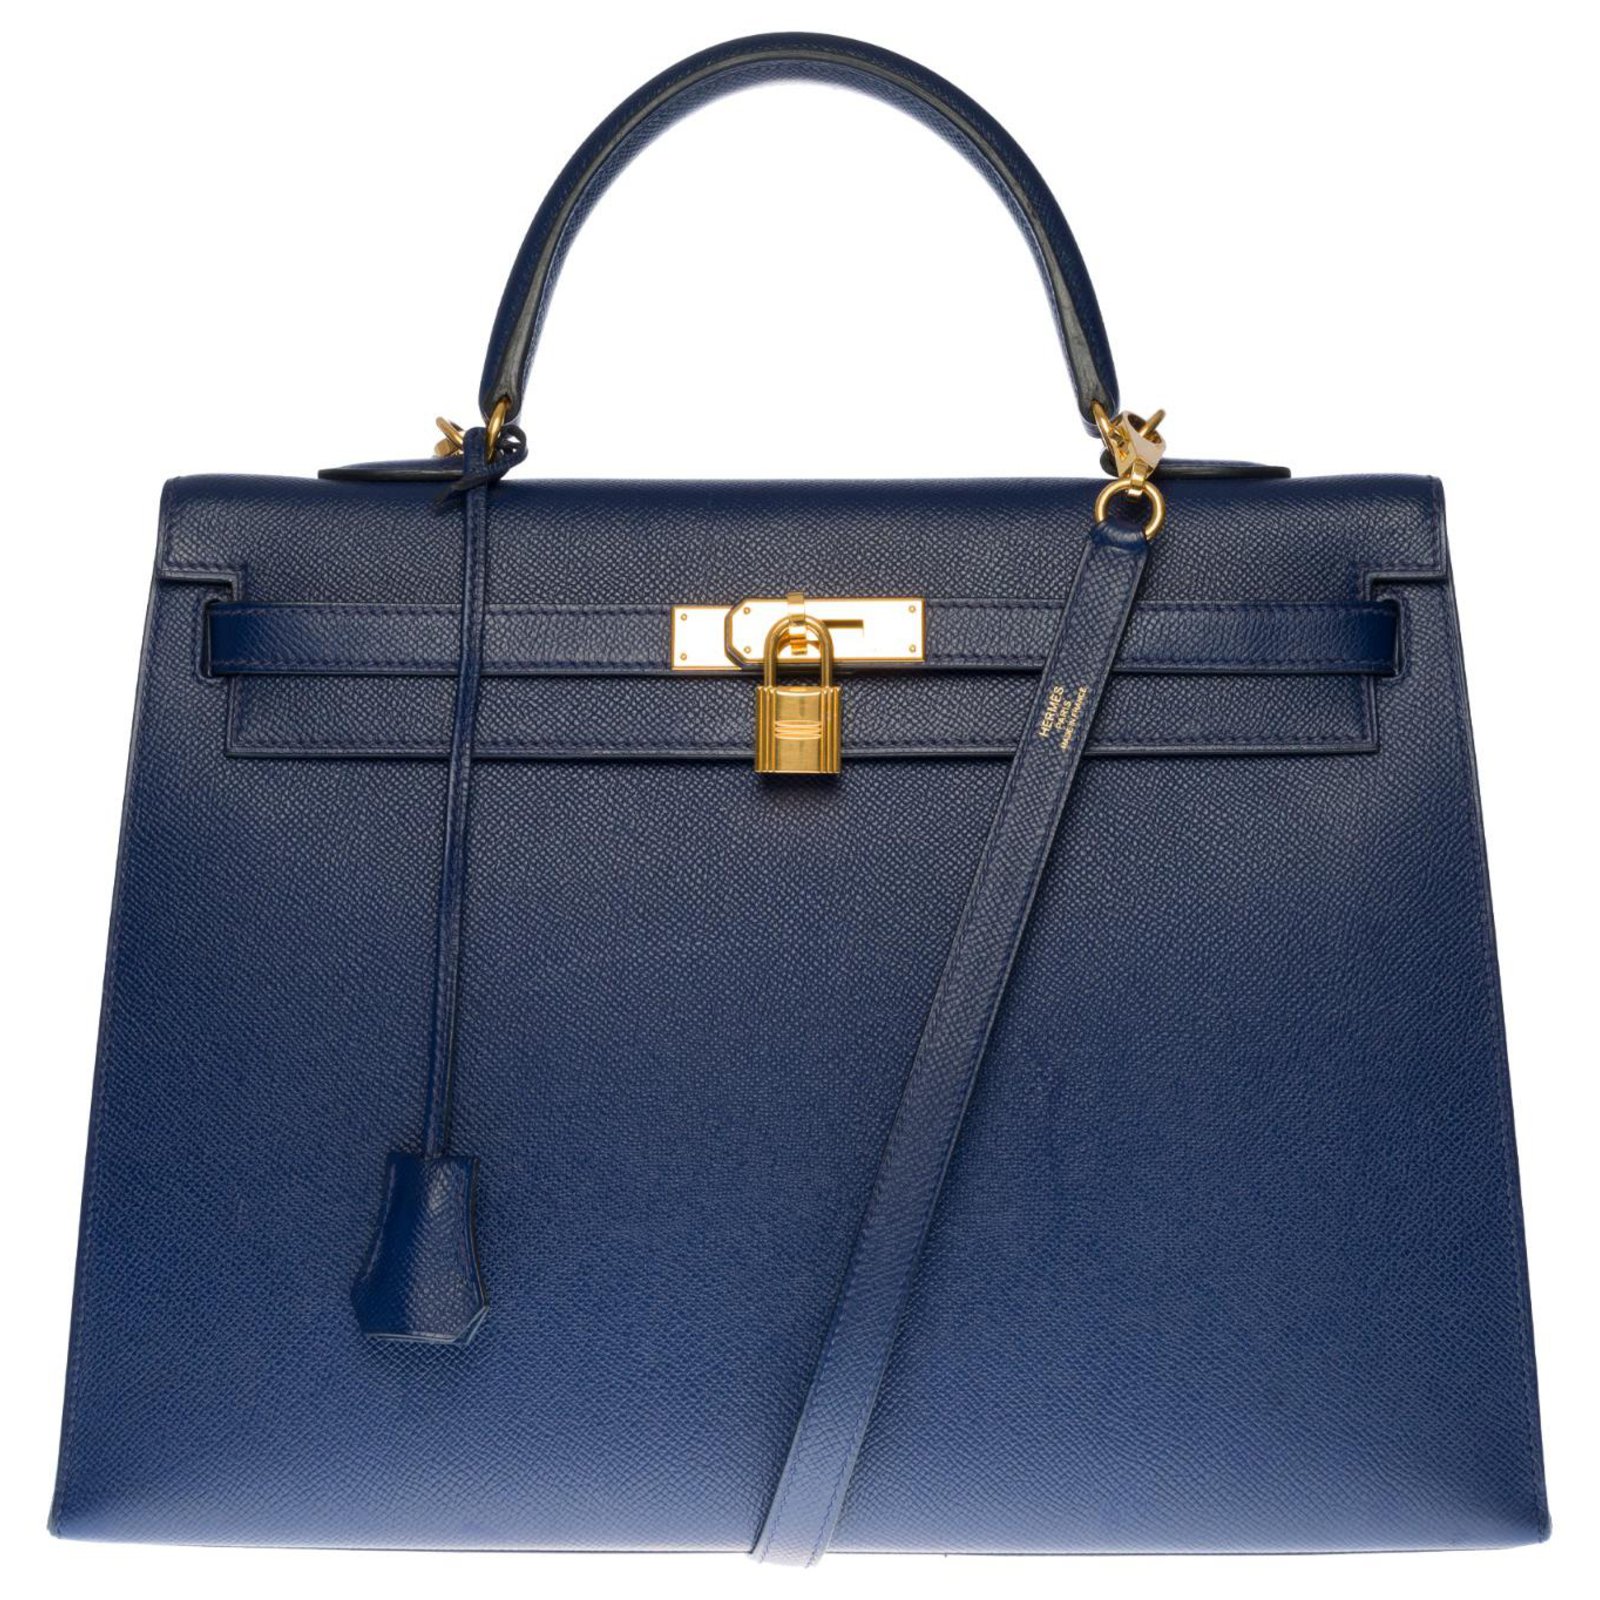 Beautiful Hermès Kelly bag 35 cm saddle strap in Saphir blue Epsom ...